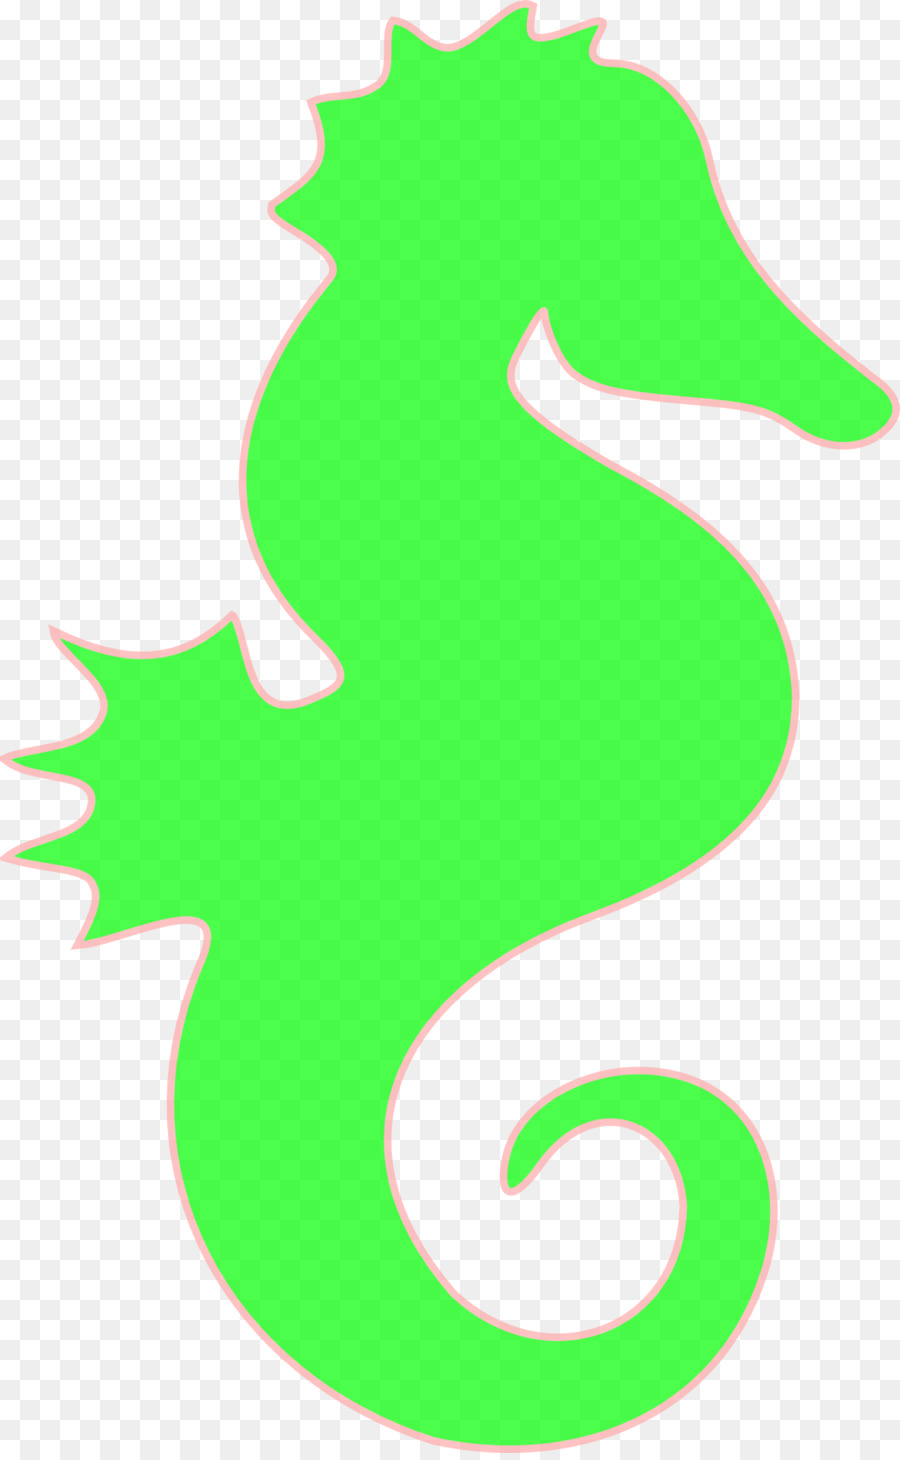 Seahorse Silhouette Clip art - seahorse png download - 1189*1920 - Free Transparent  Seahorse png Download.